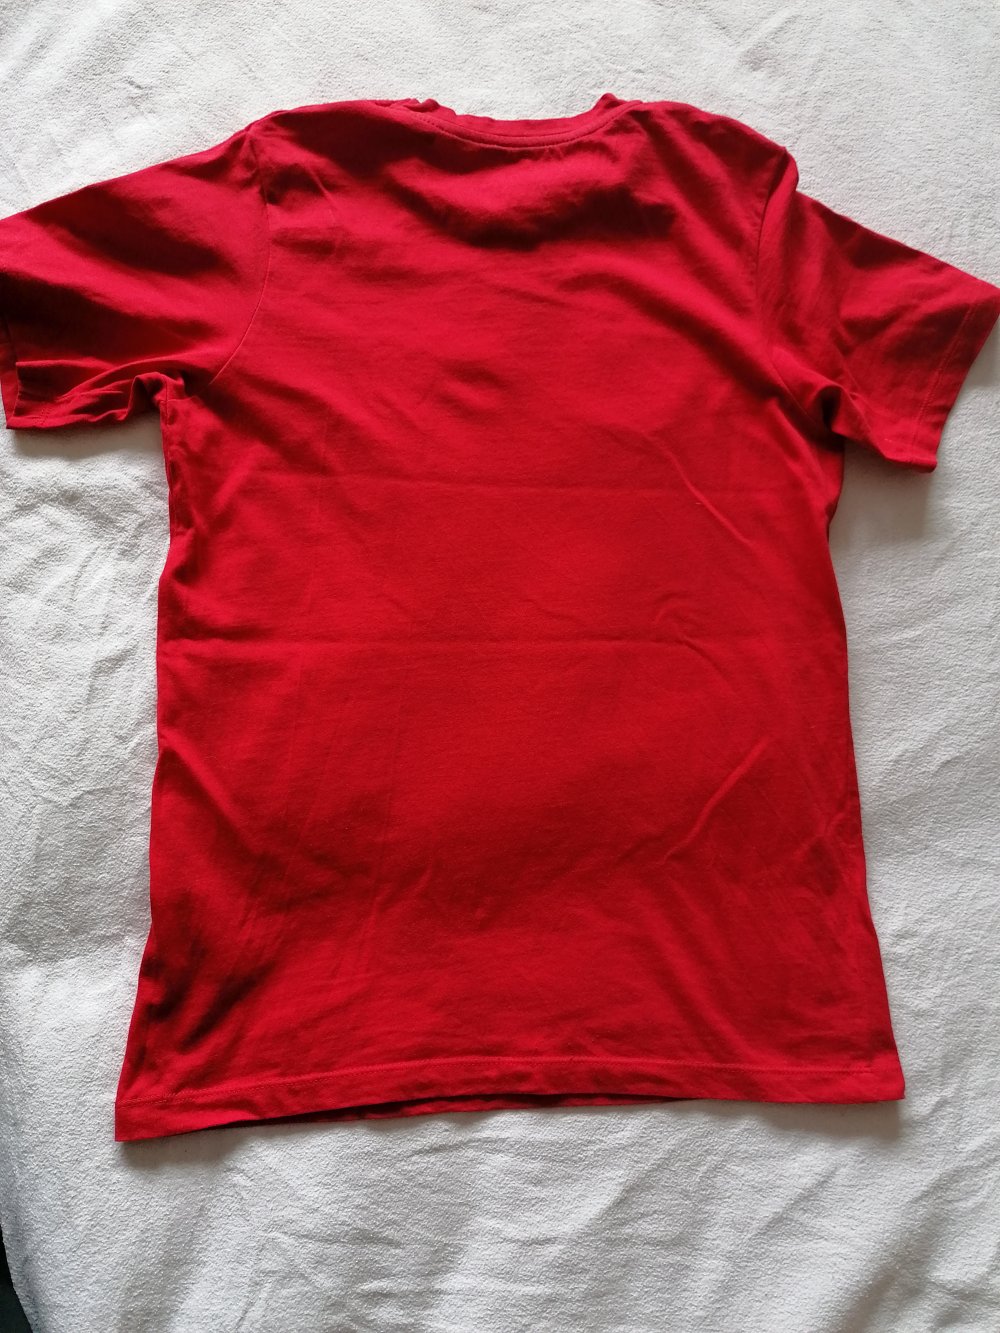 Jack&Jones: rotes T-Shirt Gr. 164